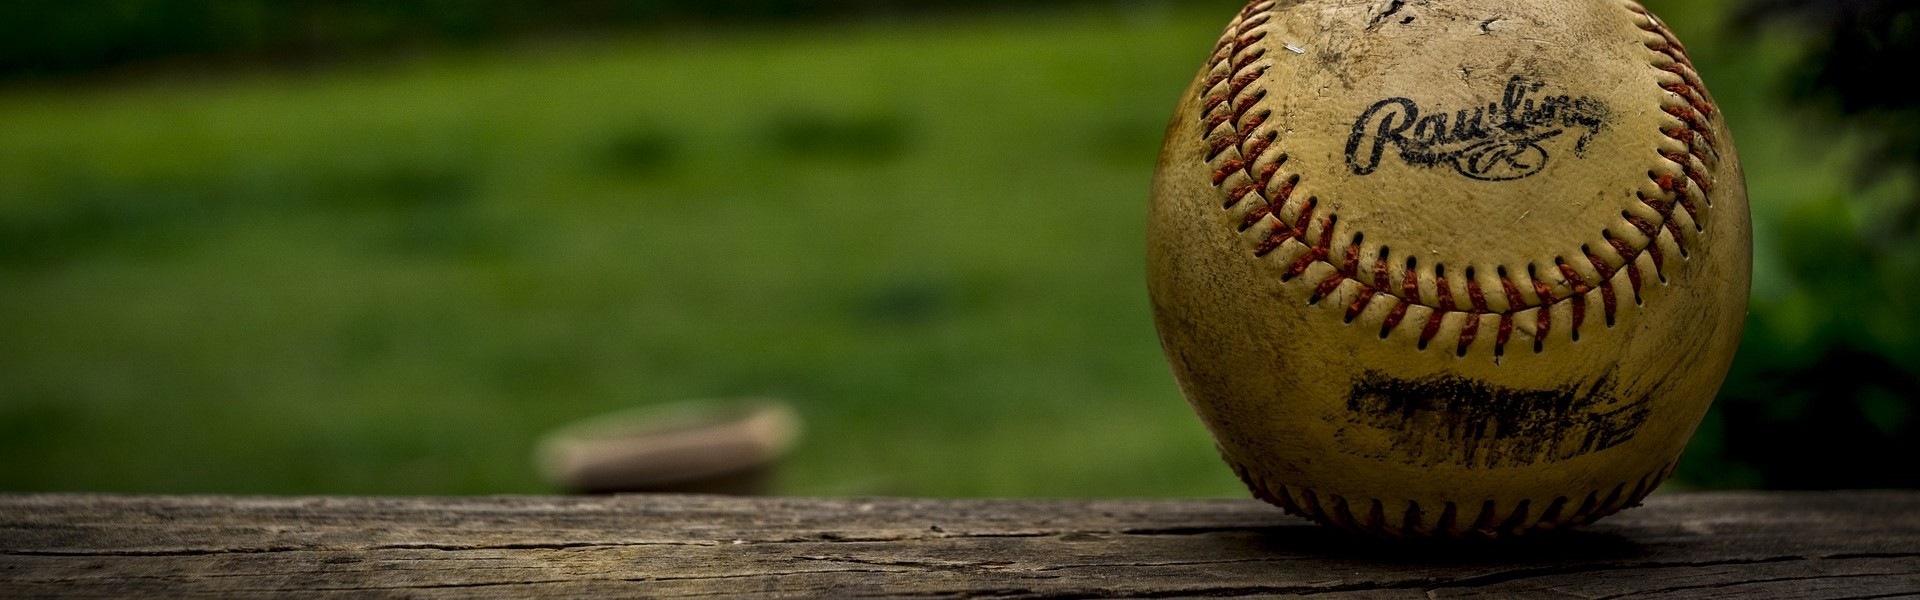 baseball on wooden railing